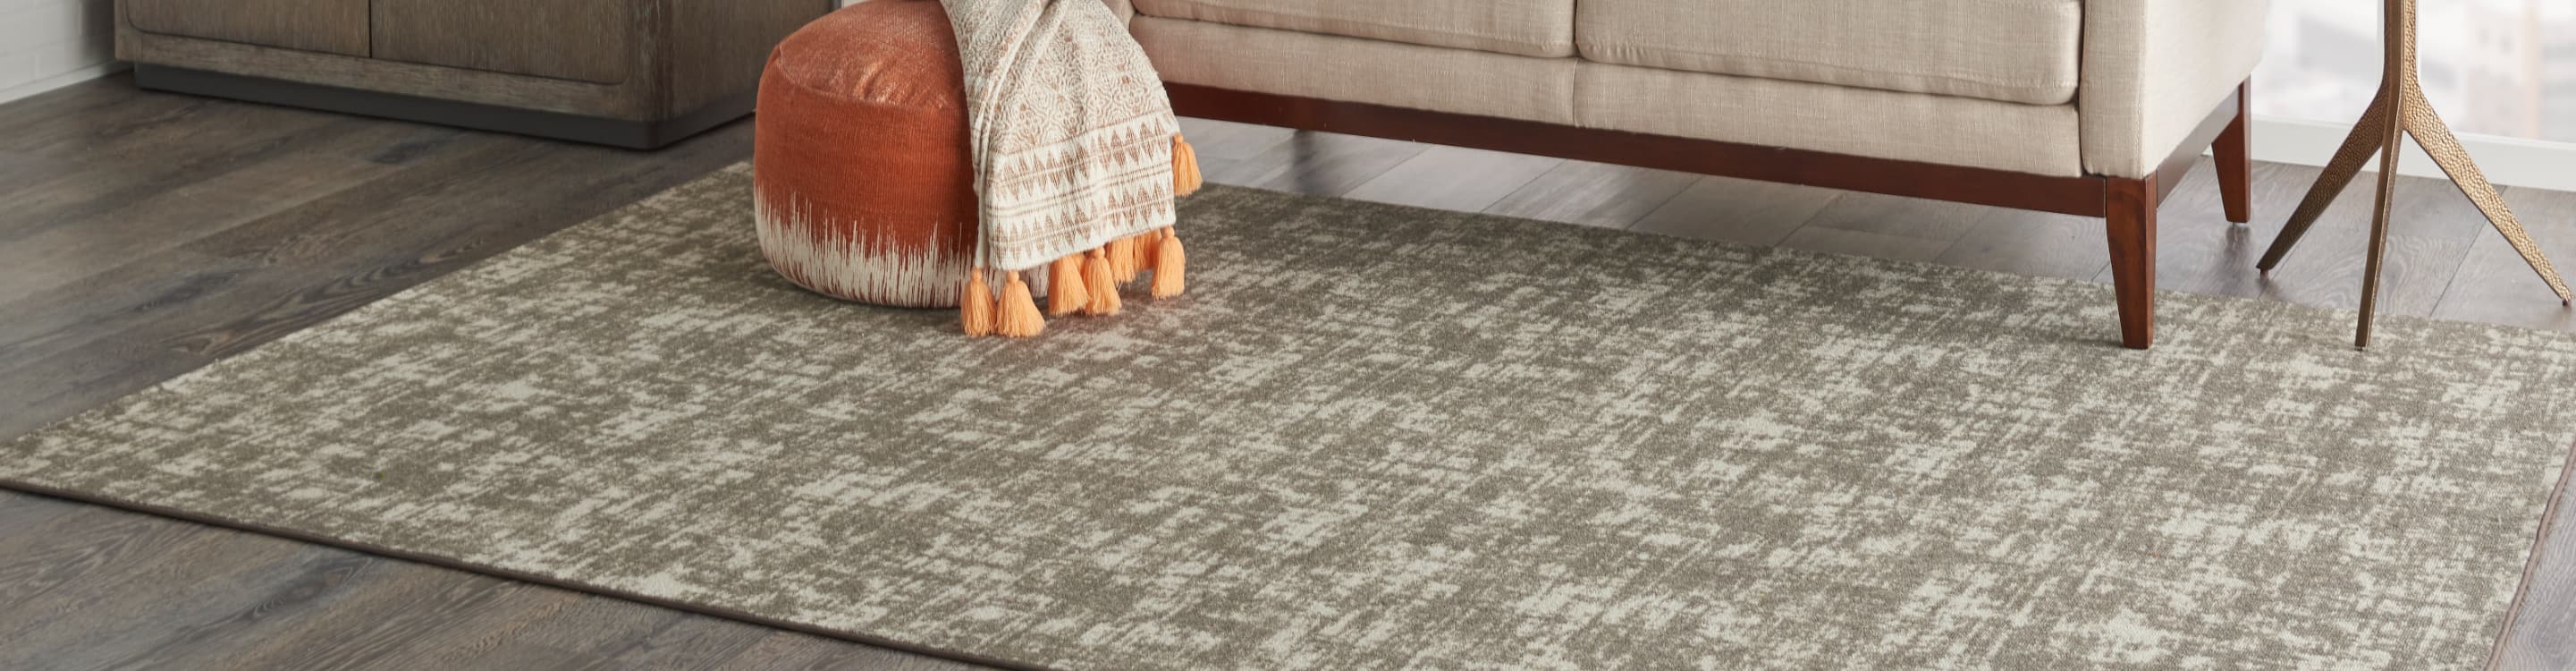 patterned carpet area rug on a wood-look floor